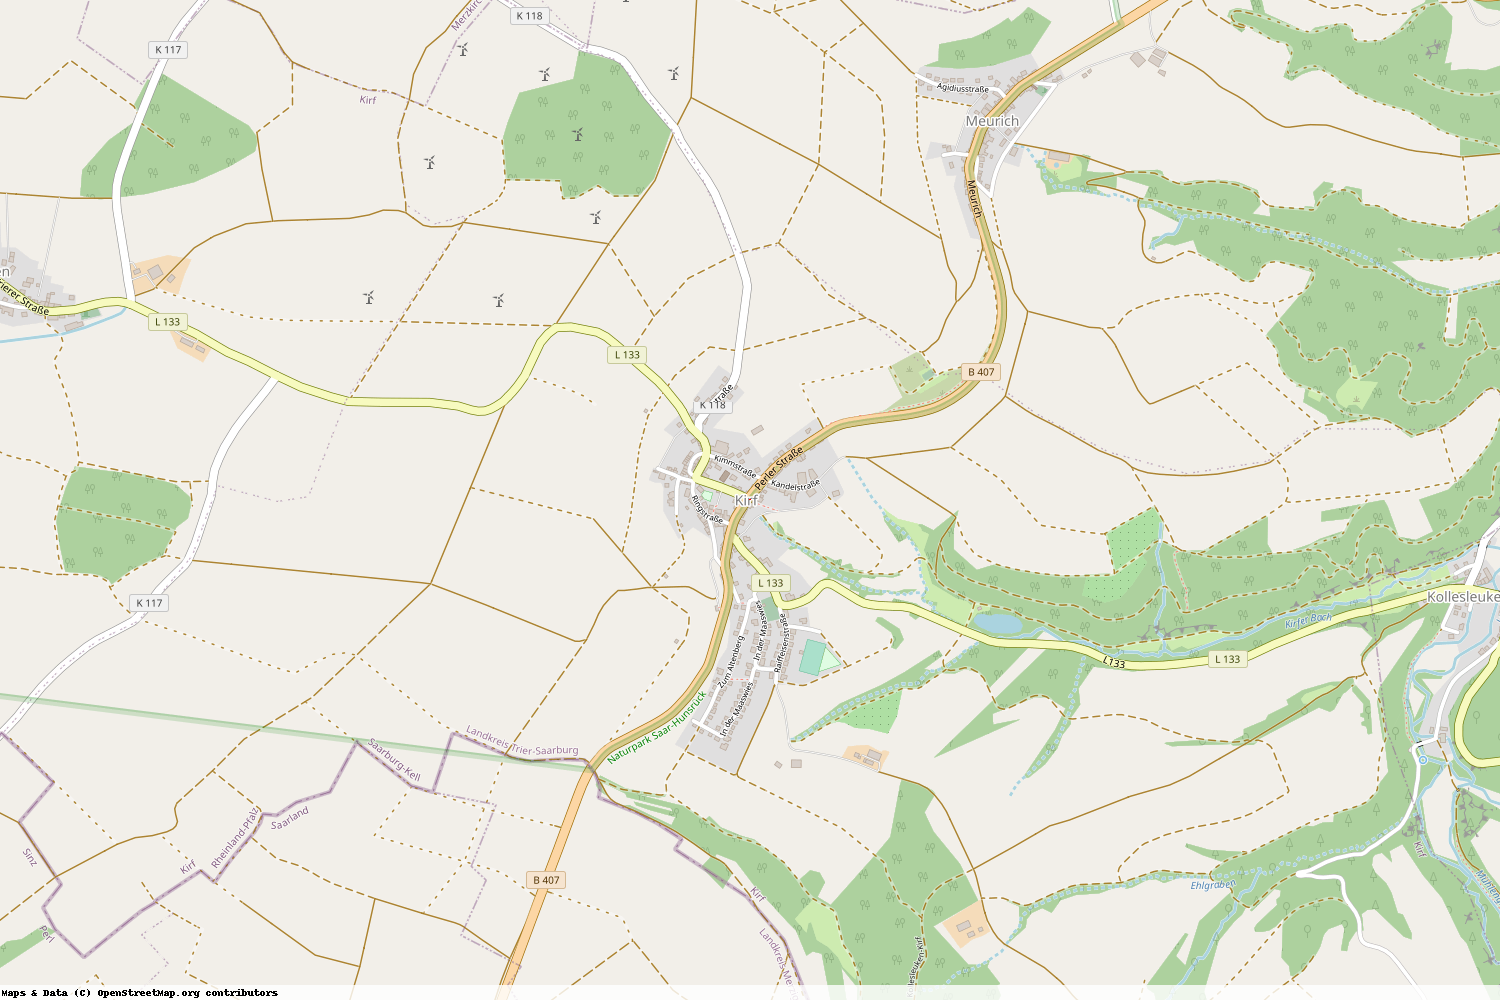 Ist gerade Stromausfall in Rheinland-Pfalz - Trier-Saarburg - Kirf?